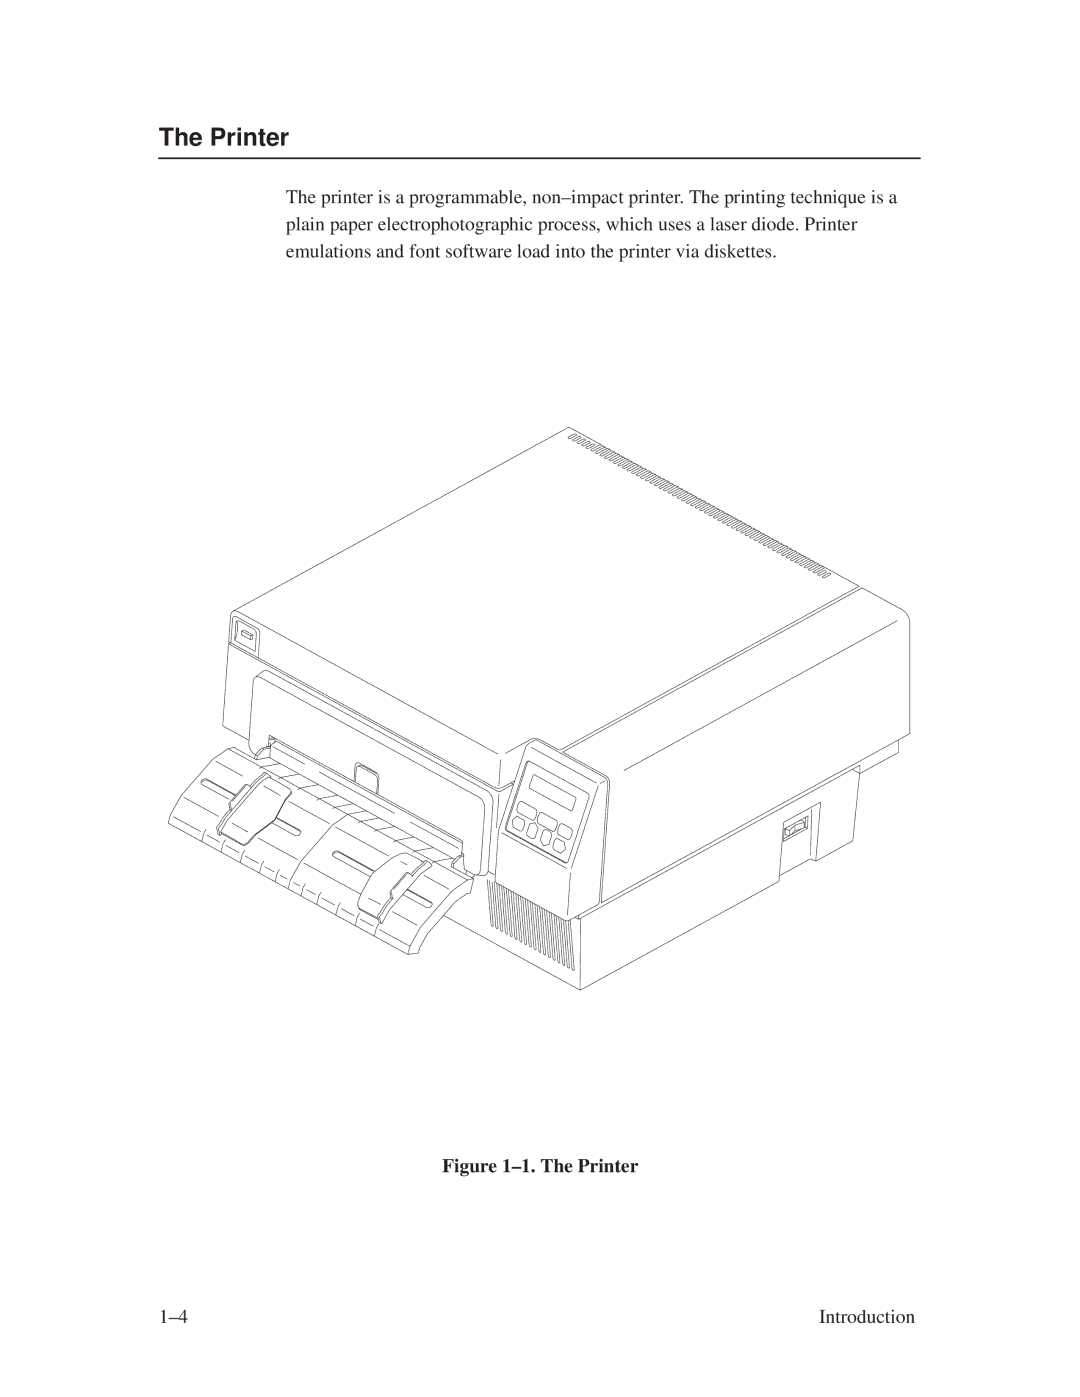 Printronix L1024 manual ±1. The Printer 